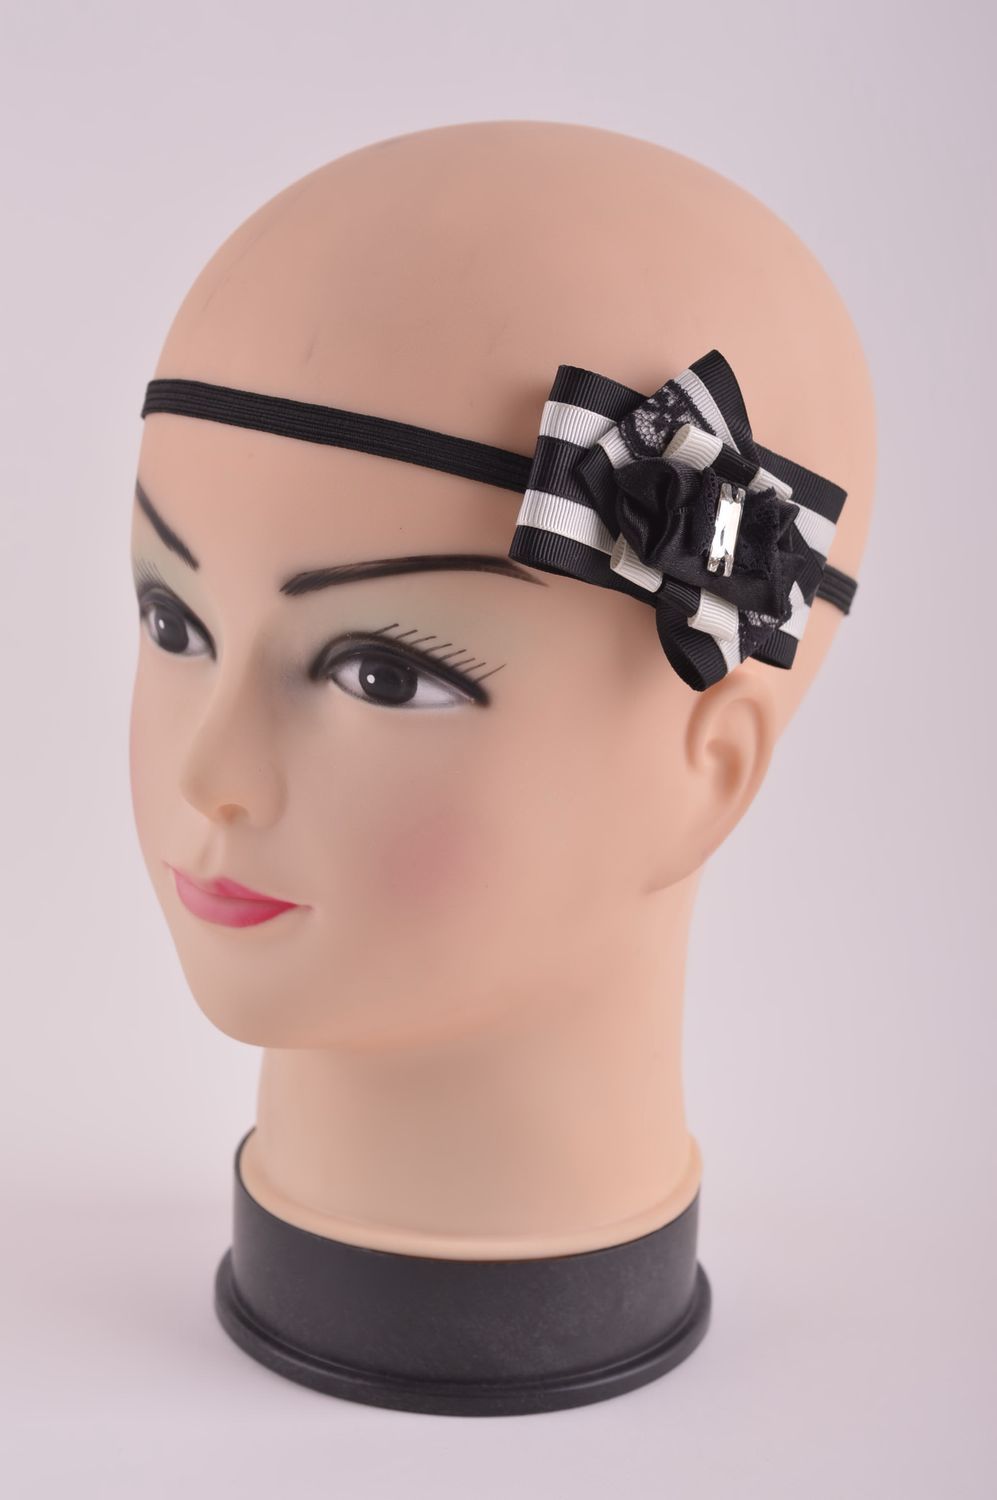 Stylish hair accessory handmade black and white headband designer present photo 2